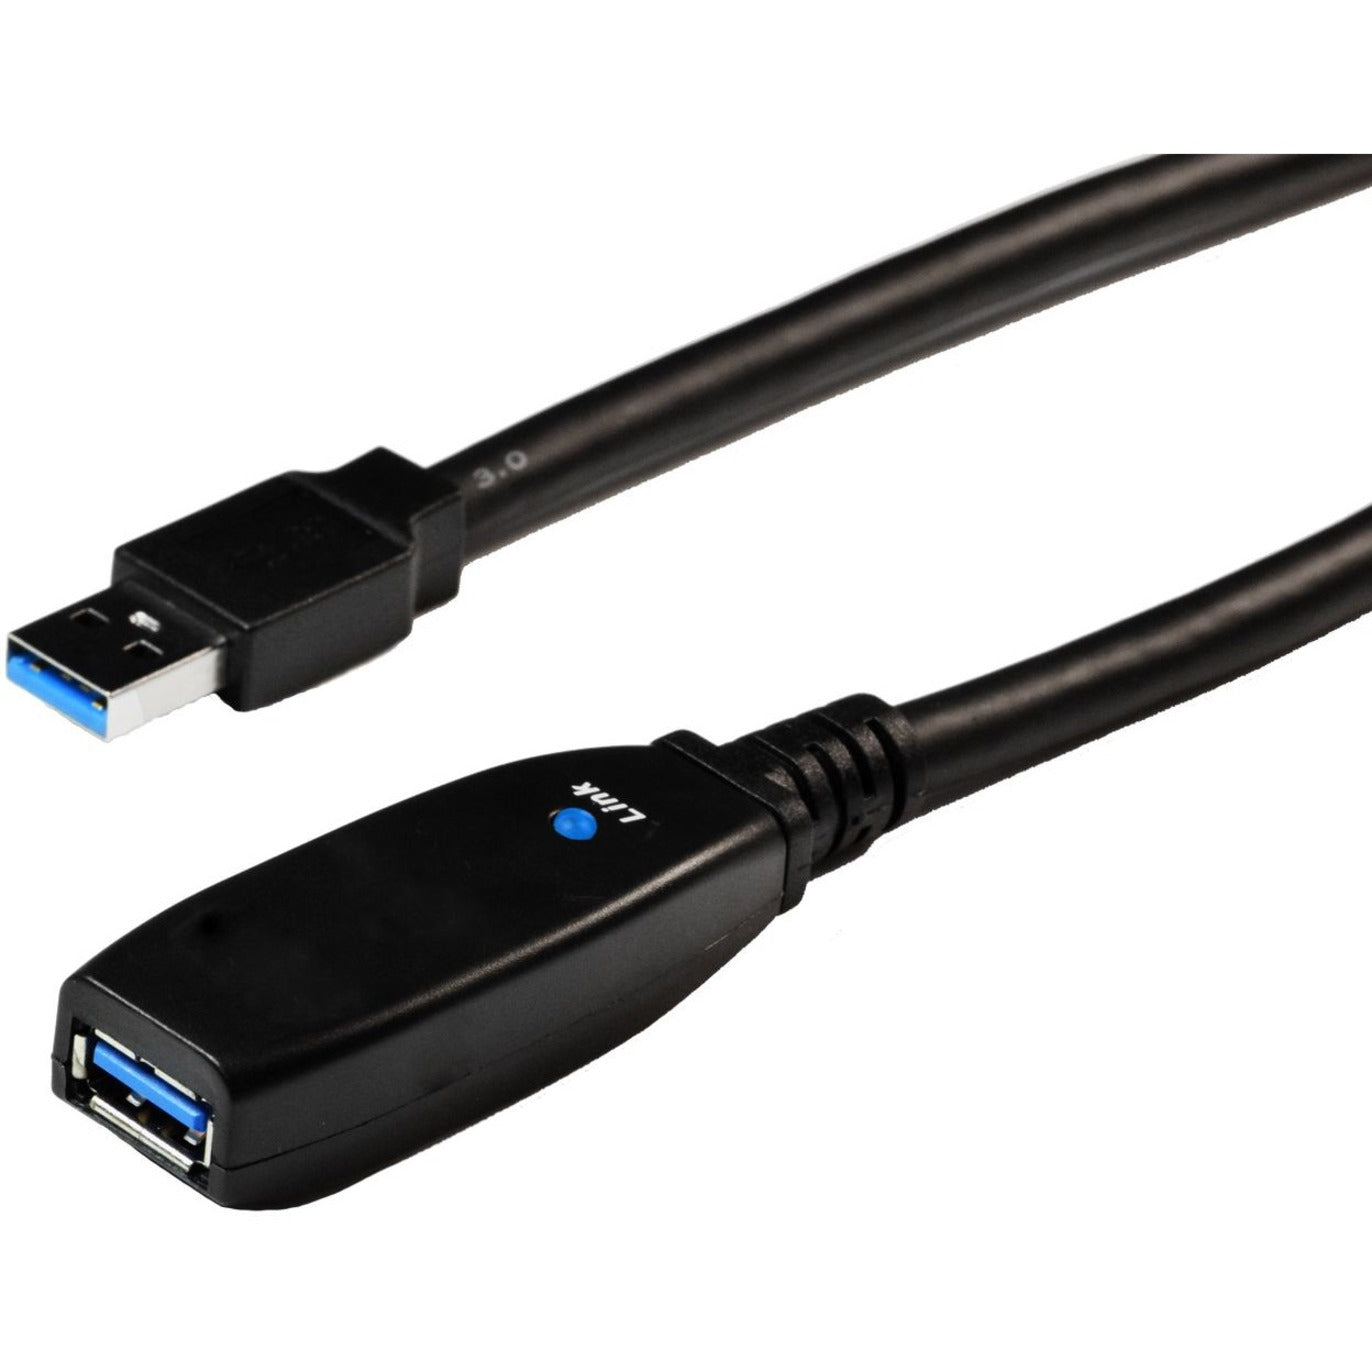 7m aktives USB-3.0-Verlängerungskabel mit LED-Signal 4X3302A27M